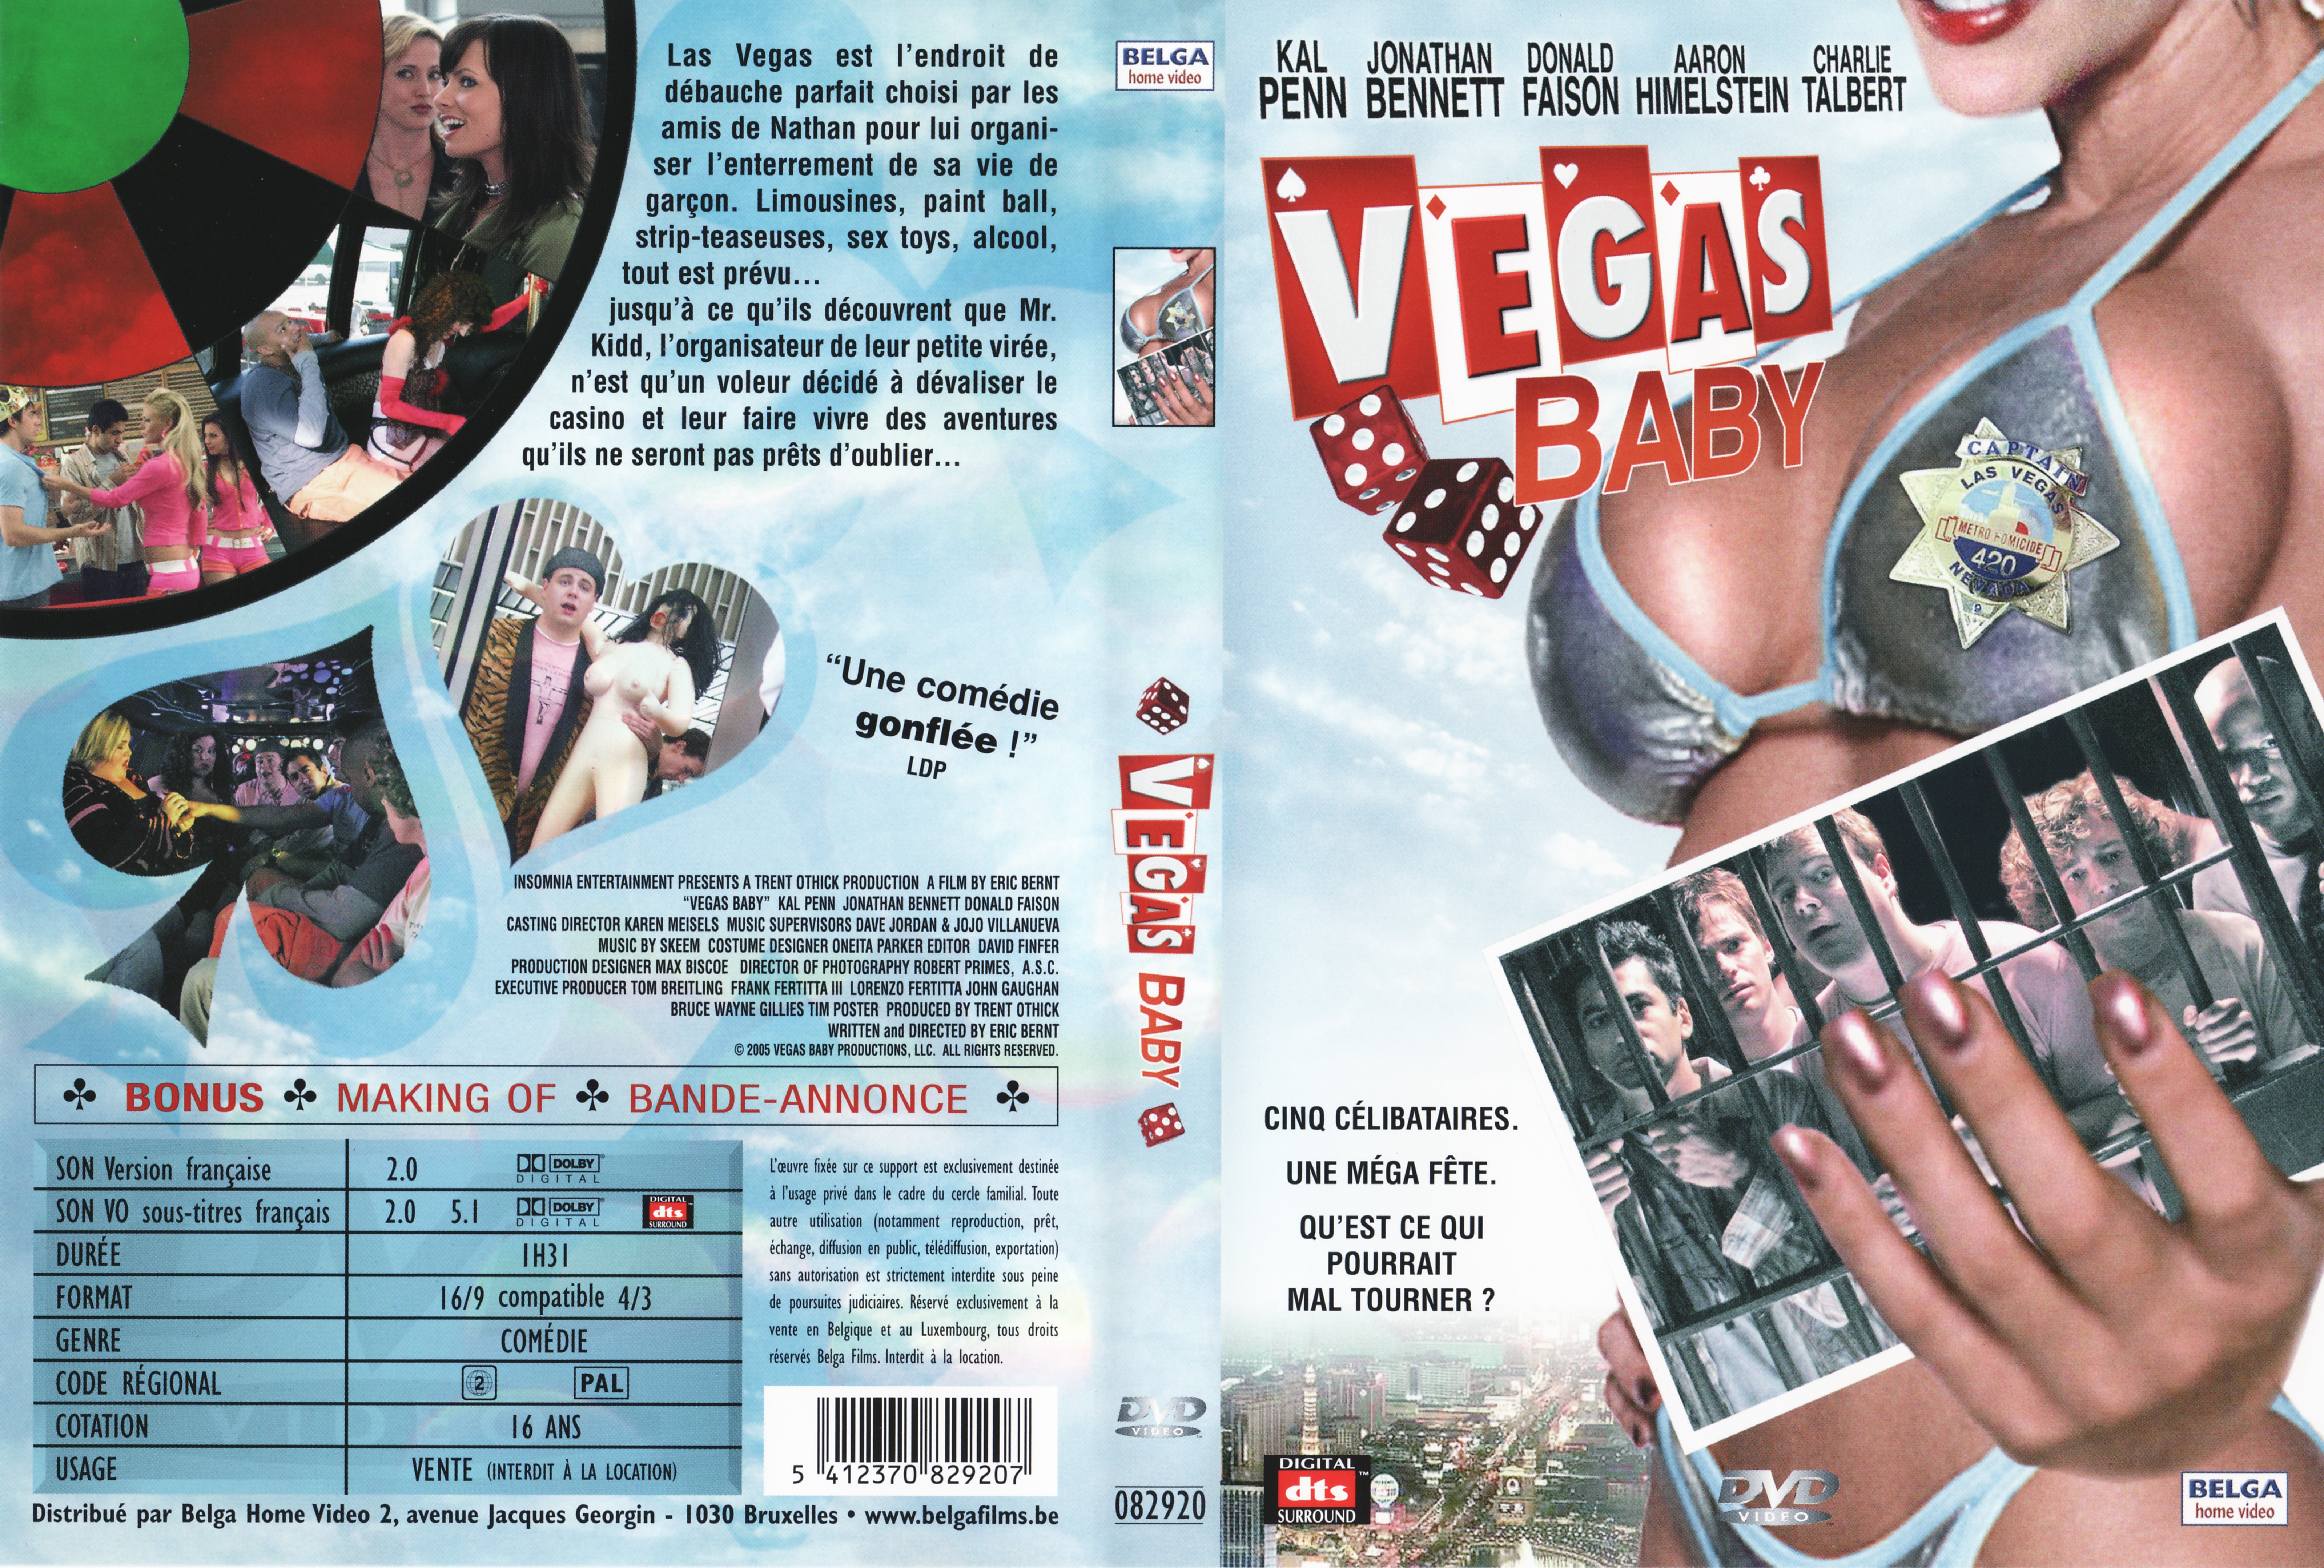 Jaquette DVD Vegas baby